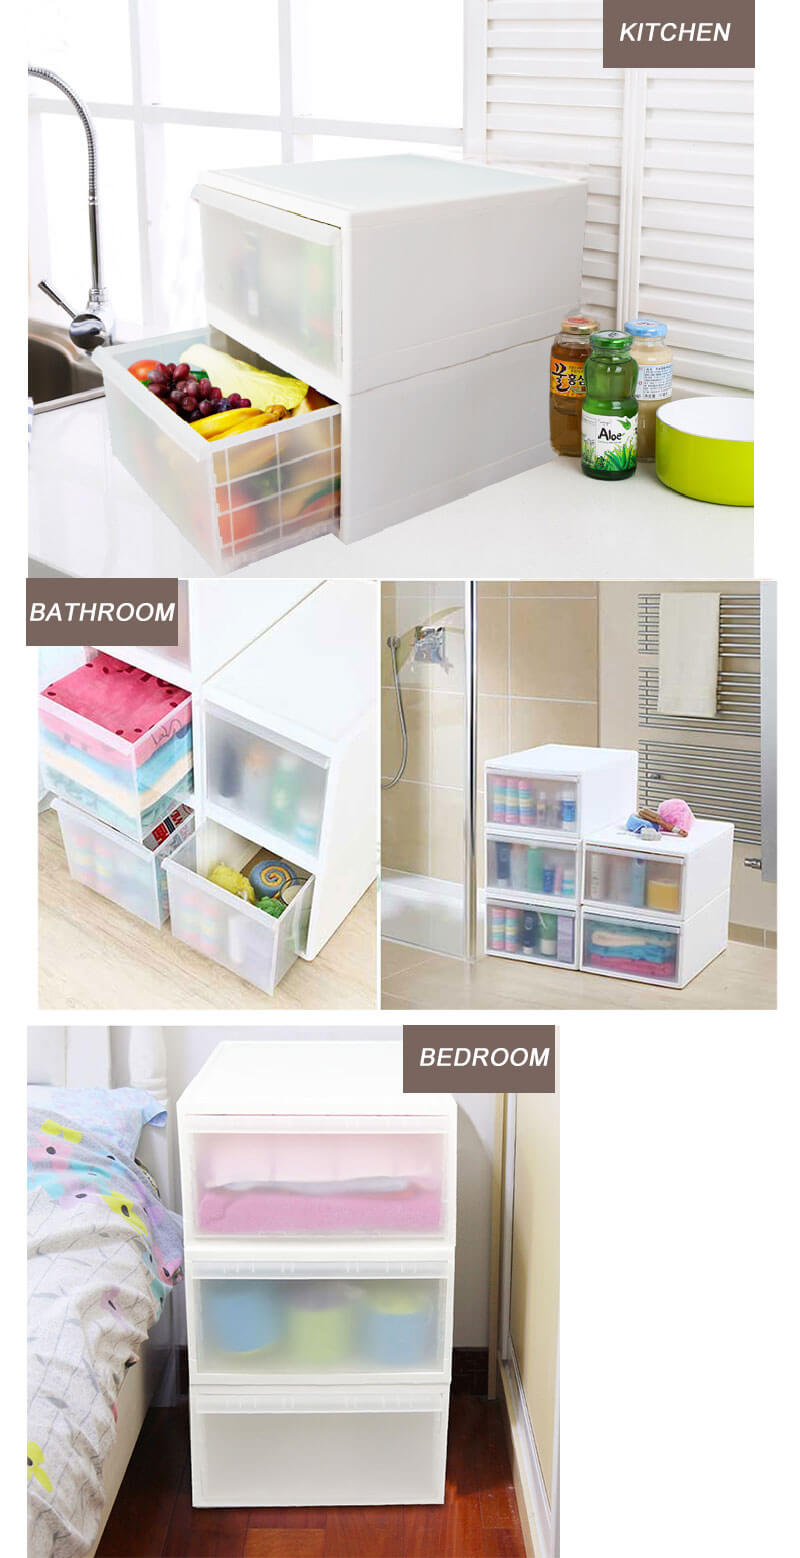 Custom Kitchen Clothing Books Toy Kids Home Storage Drawer